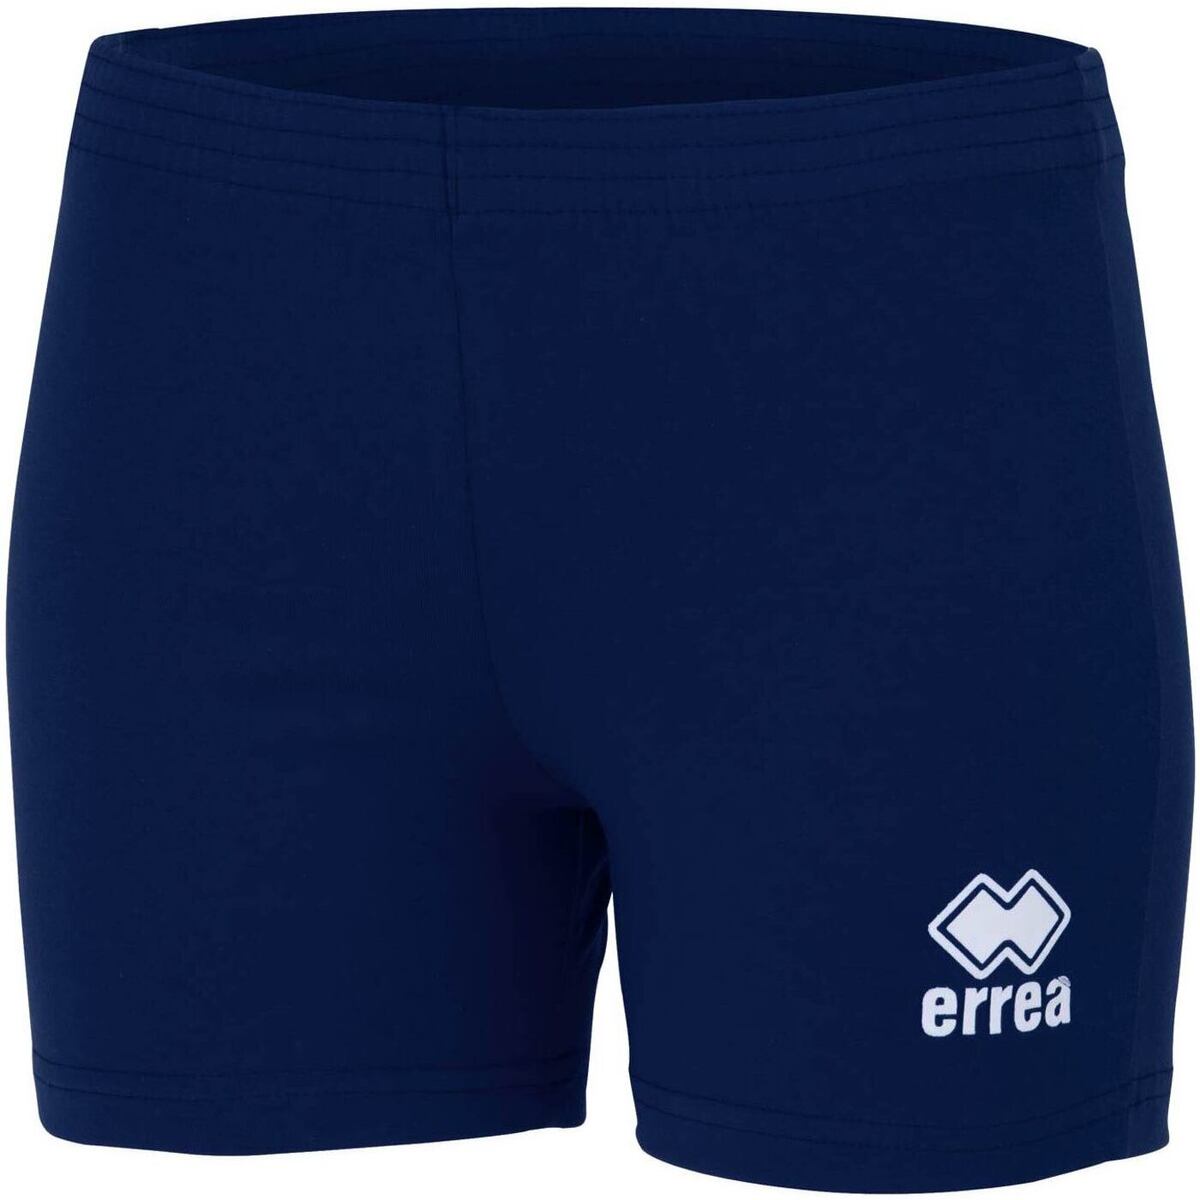 Vêtements Fille PatBO Hibiscus Cut-out Maxi Dress Short  Panta Volleyball Jr Blu Bleu